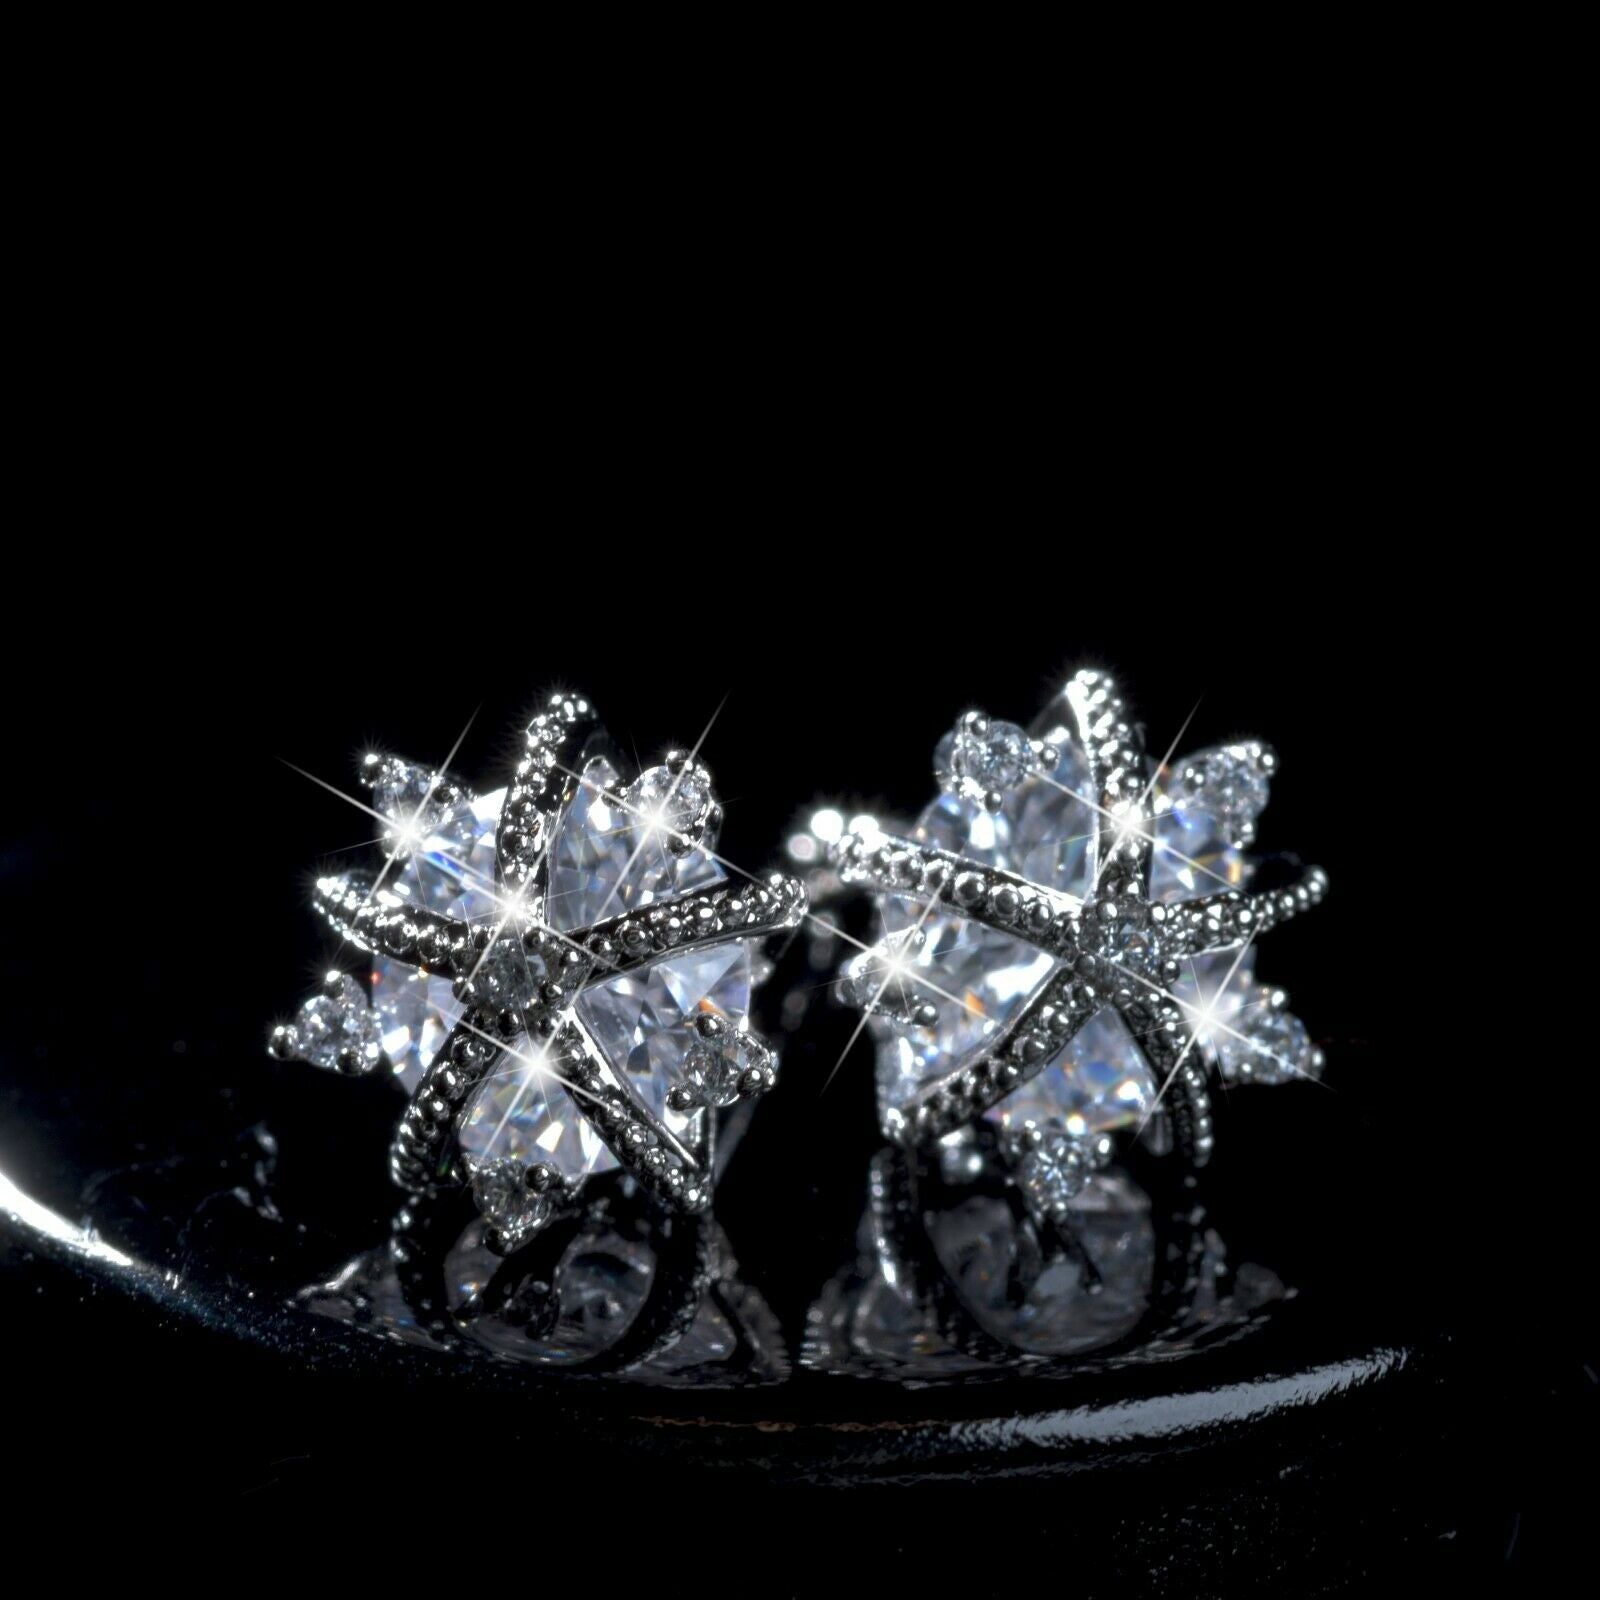 18k white gold filled made with SWAROVSKI crystal star Pentagram stud earrings